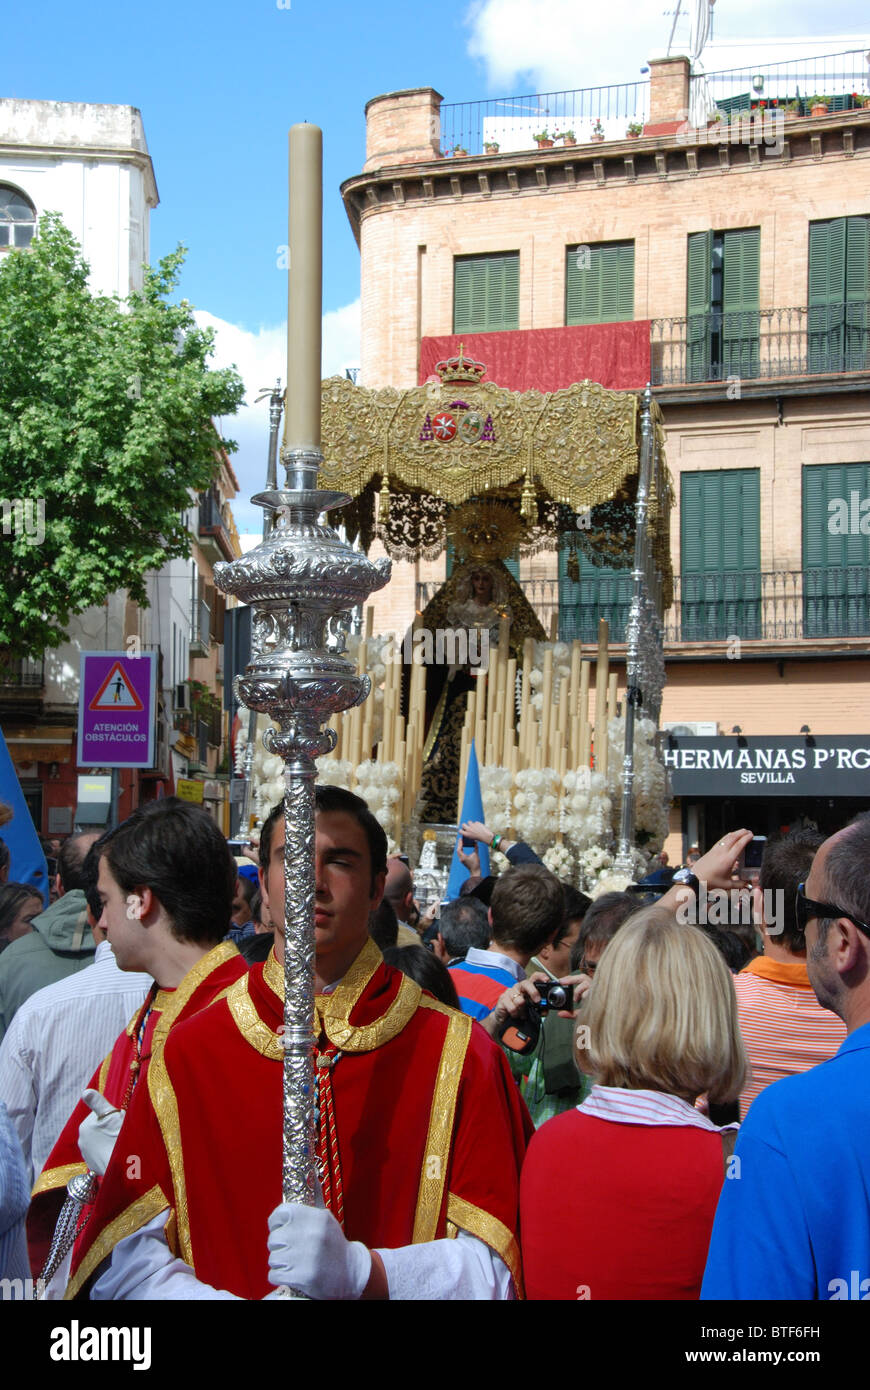 Santa Semana (Holy week), Seville, Seville Province, Andalucia, Spain, Western Europe. Stock Photo